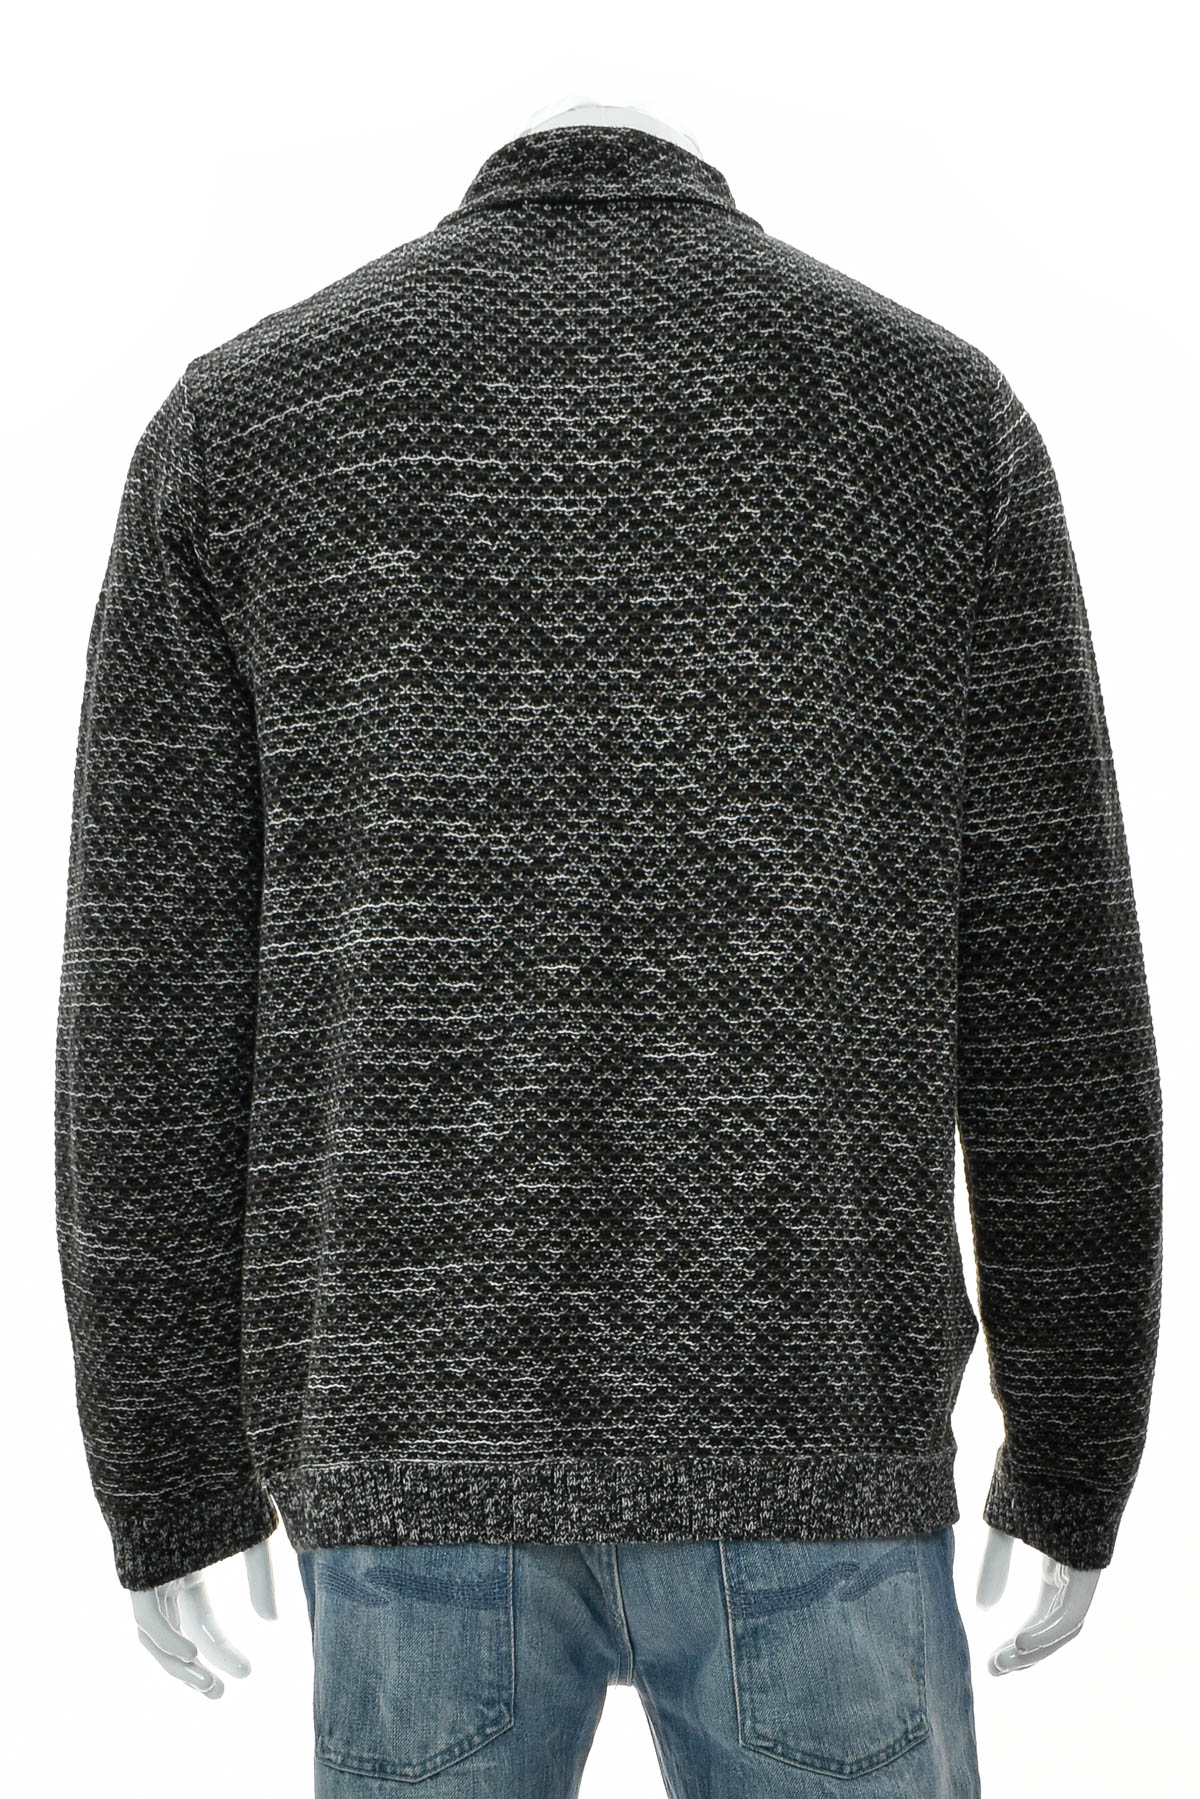 Men's sweater - No Excess - 1